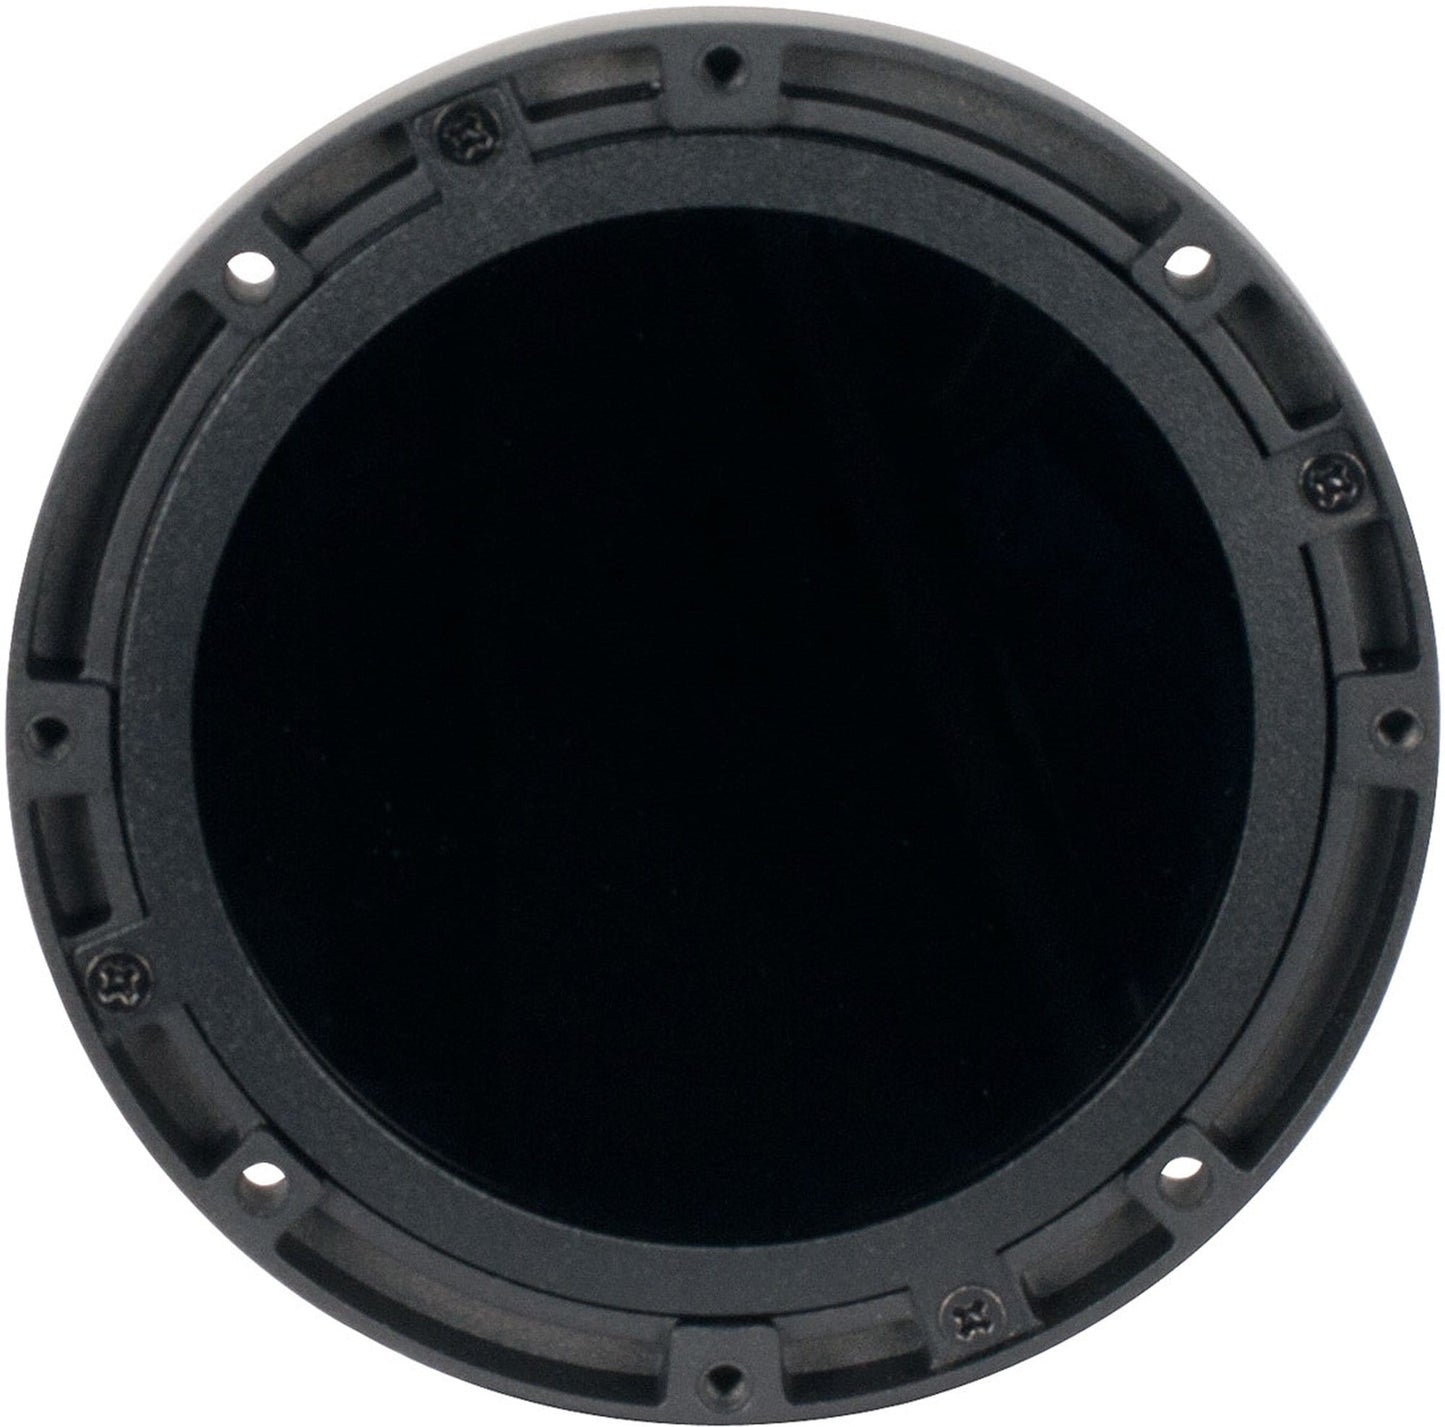 Magmatic Prisma Mini Par Black Glass UV Filter - ProSound and Stage Lighting